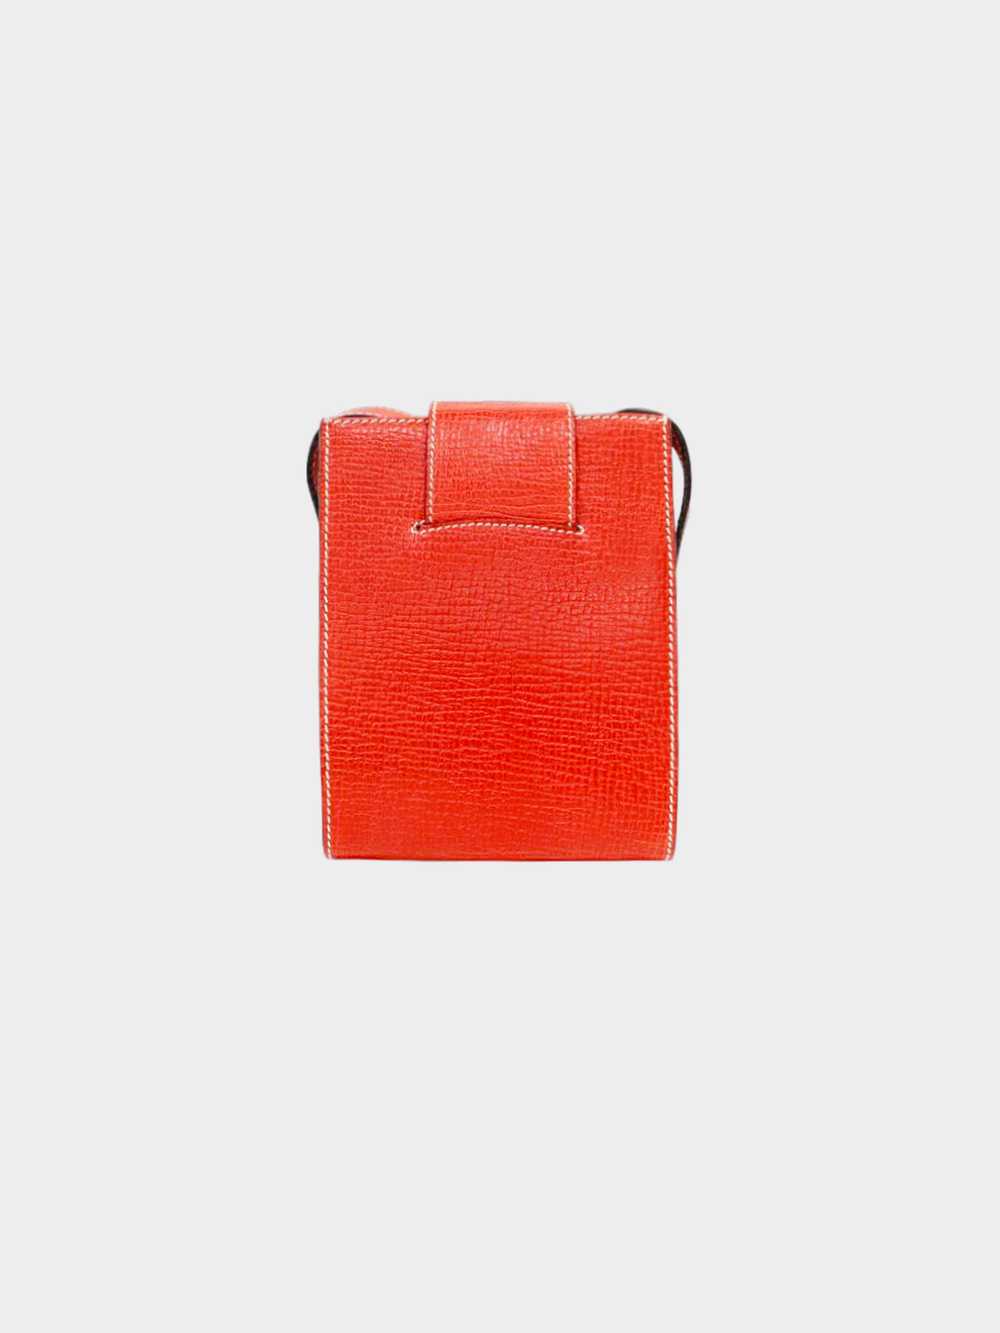 Loewe 2010s Red Mini Toggle Shoulder Bag - image 2